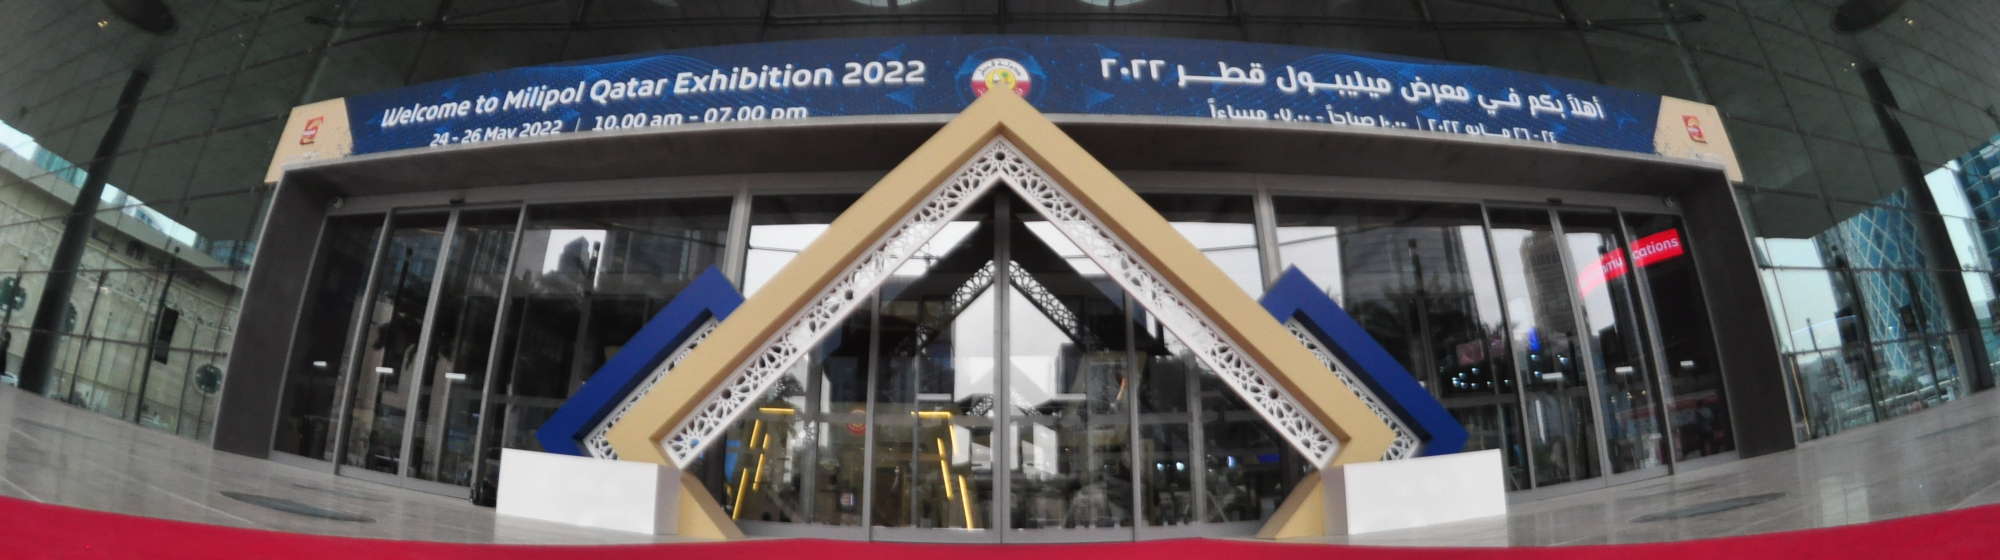 Entrance of the DECC, Milipol Qatar's venue in Doha